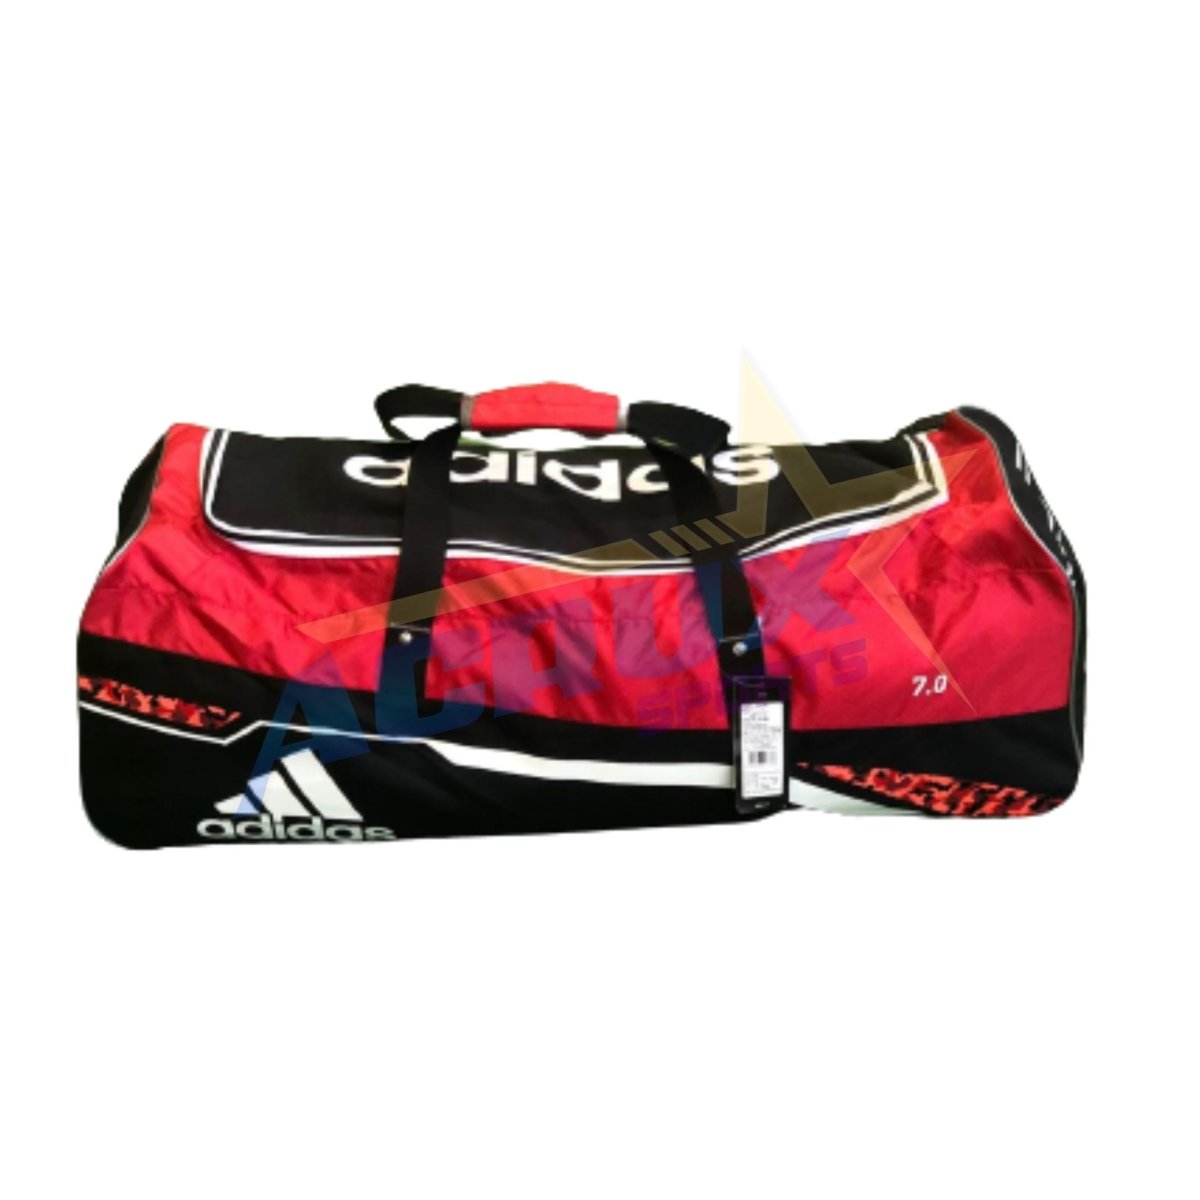 Adidas 7.0 Junior Cricket Kit Bag - Acrux Sports